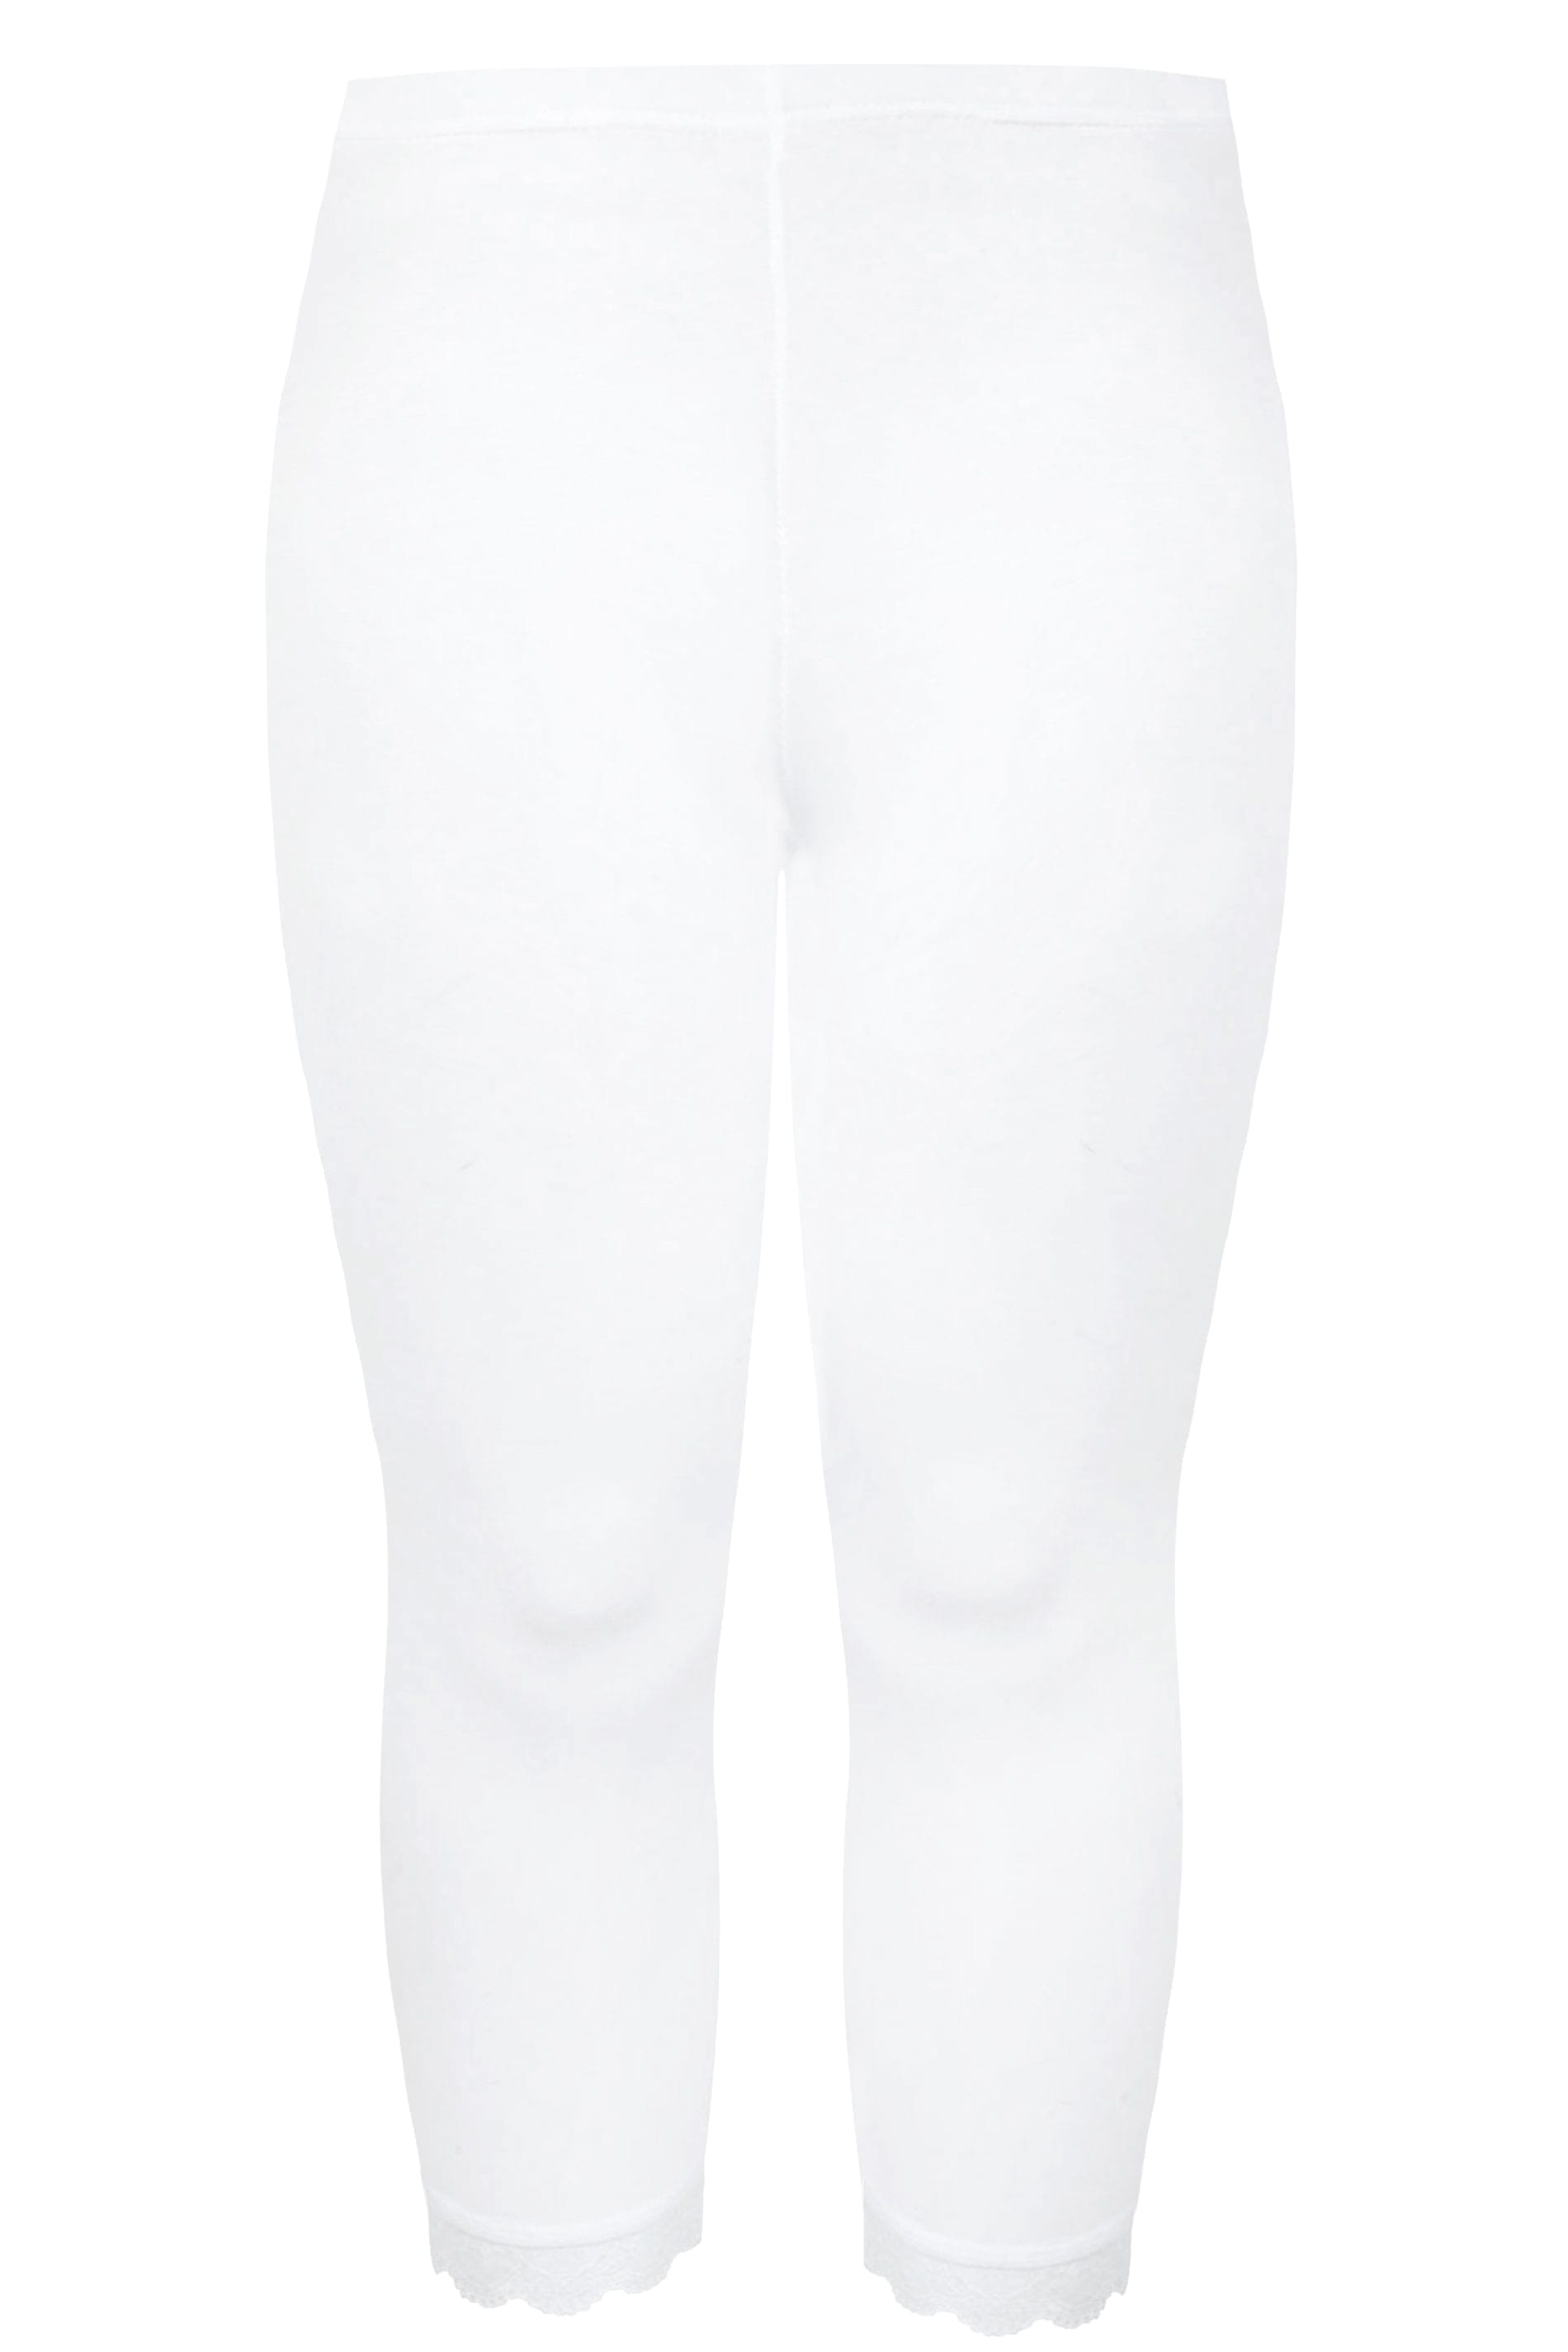 YOURS FOR GOOD Plus Size White Cotton Lace Trim Crop Leggings